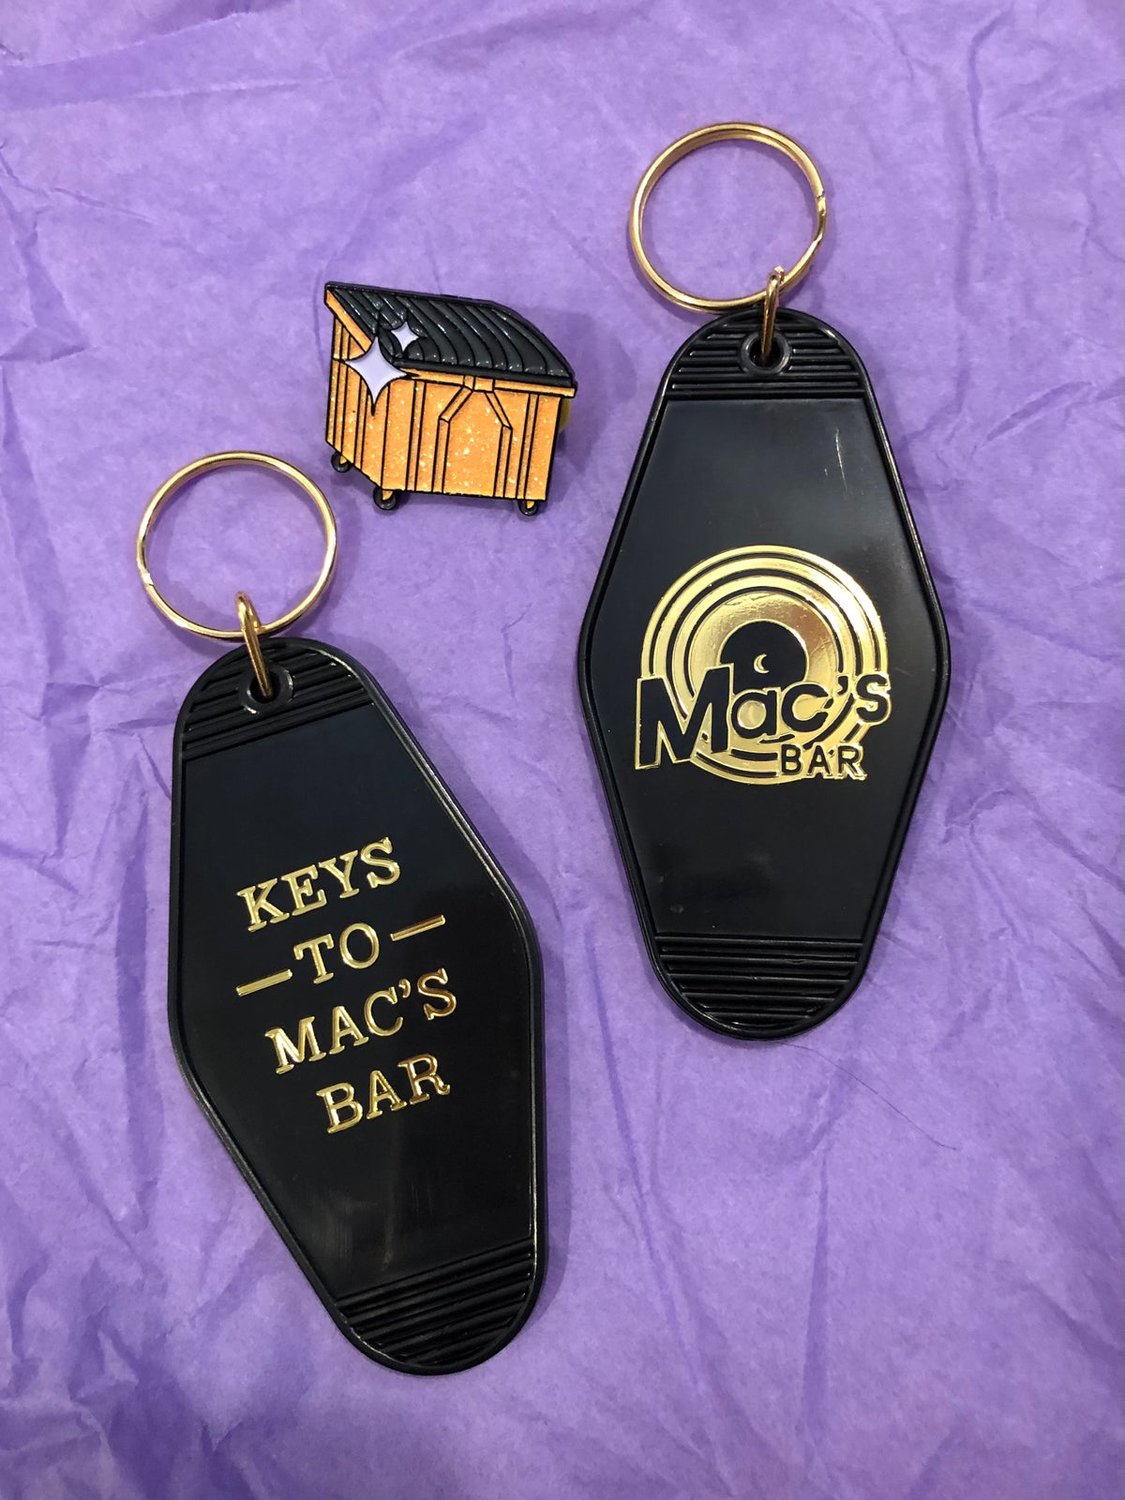 Mac's Bar keychains.